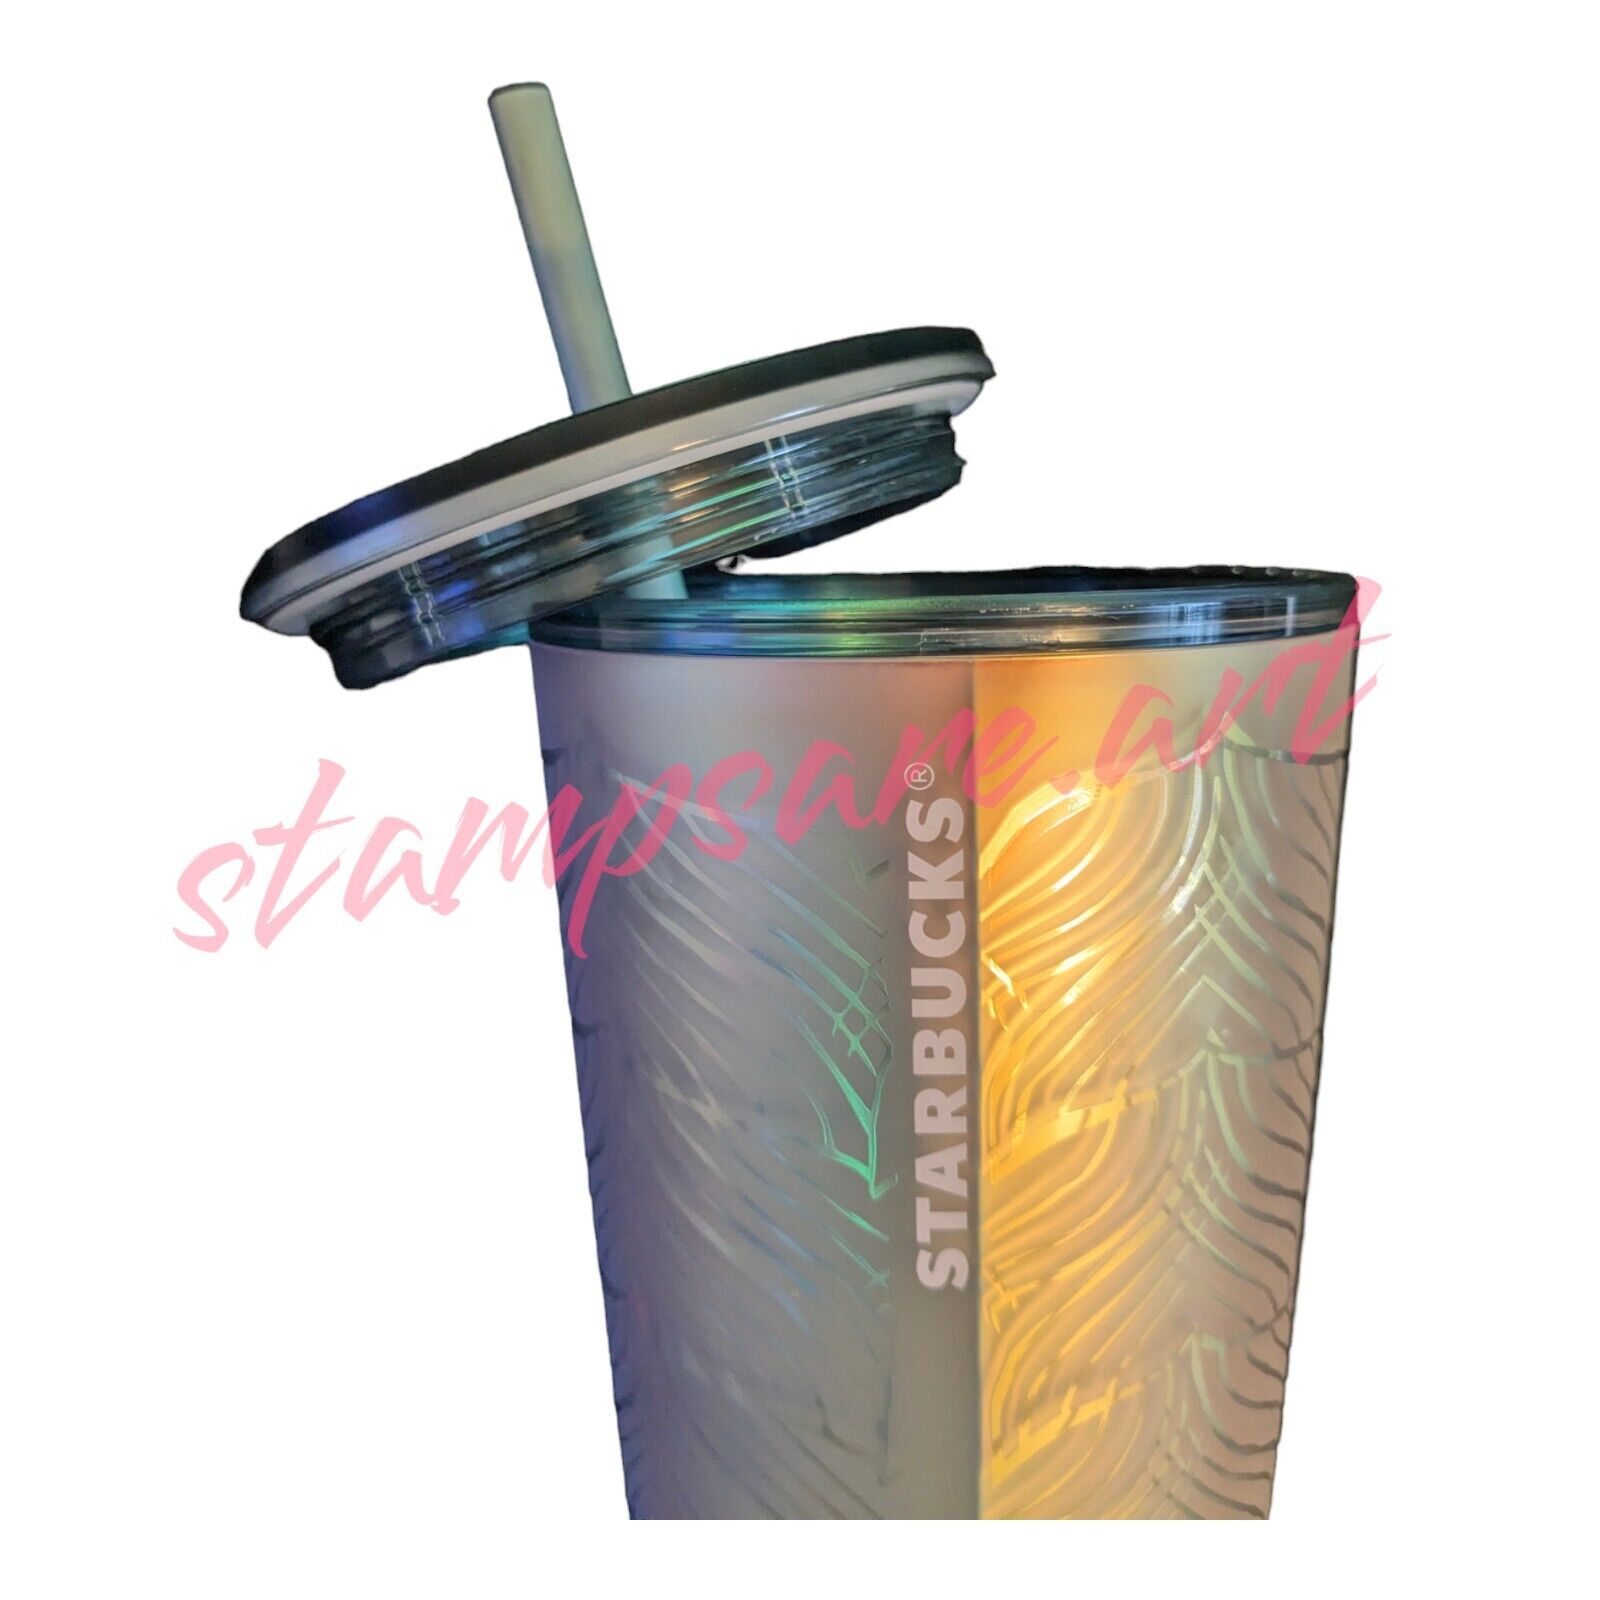 Starbucks 50th Anniversary 16oz Siren Mermaid Acrylic Frosted Tumbler Limited Ed